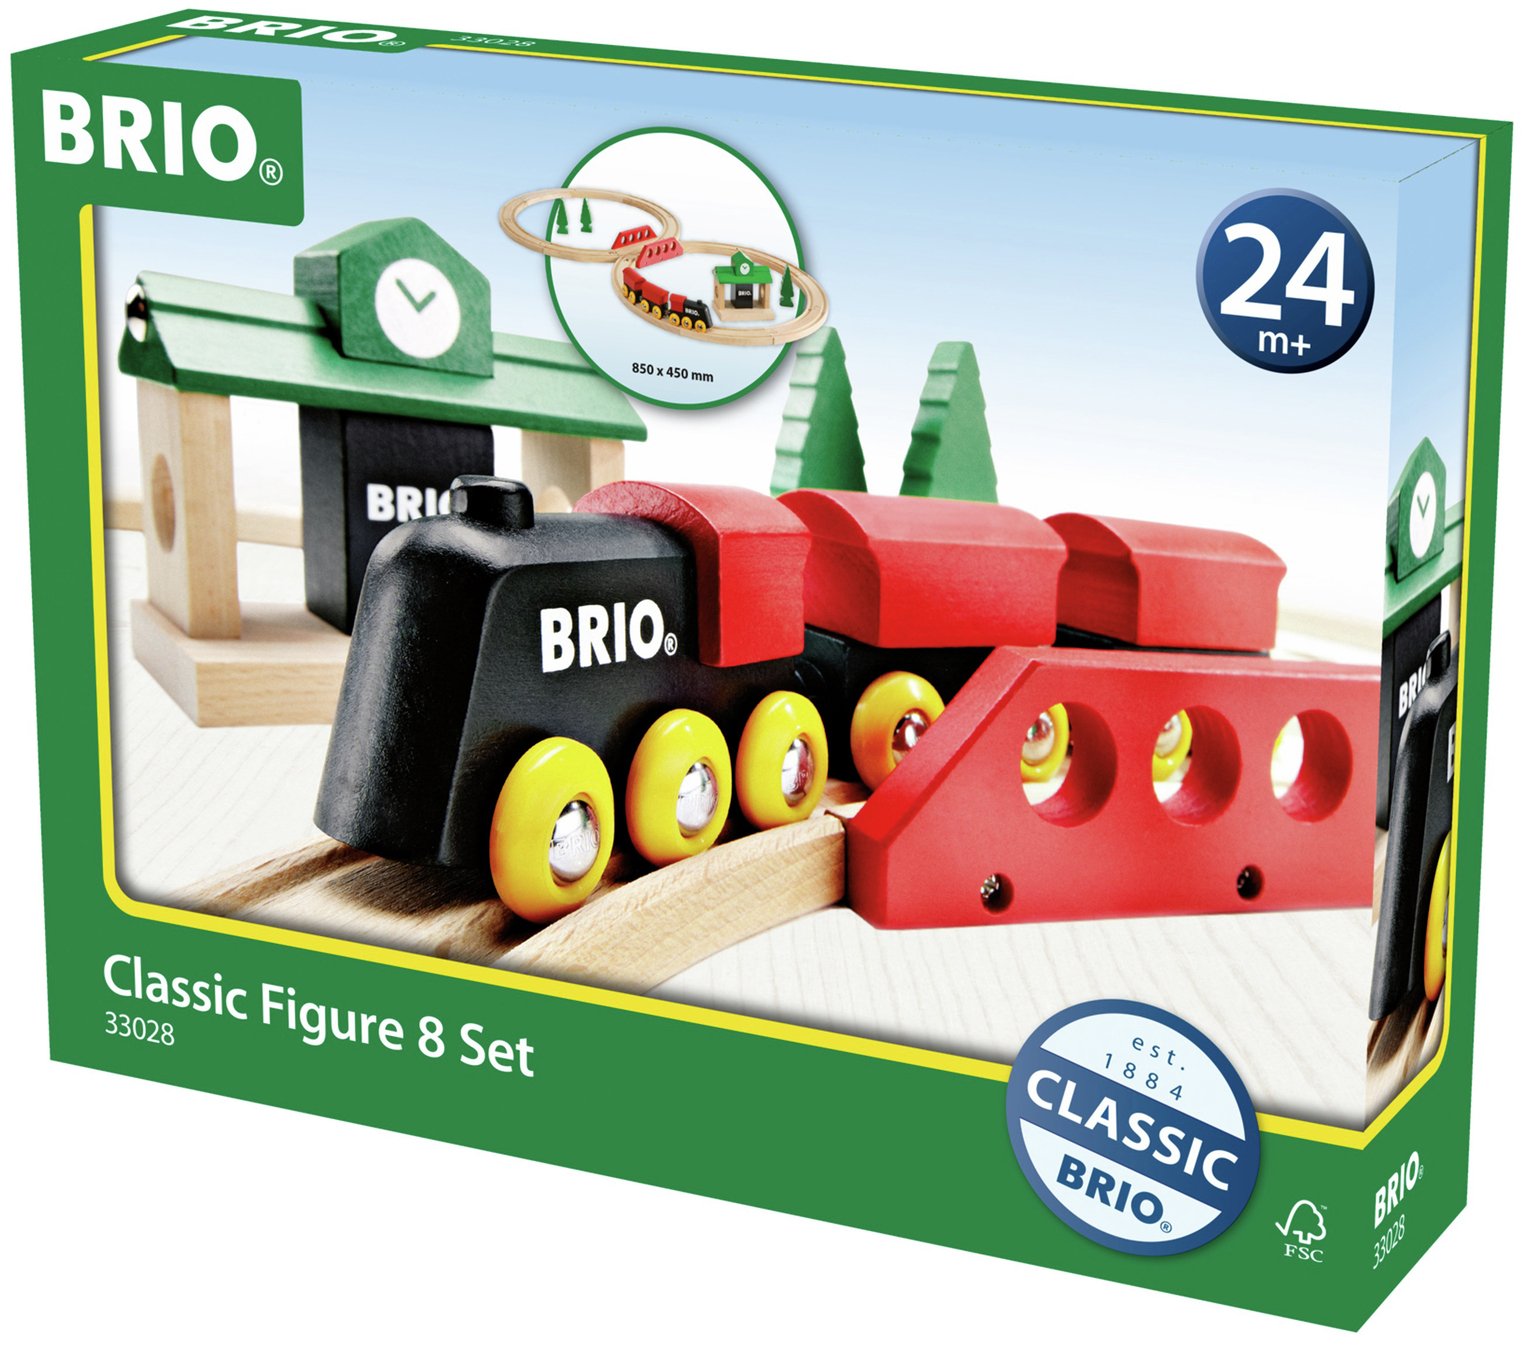 BRIO Classic 8 Figure Set Review